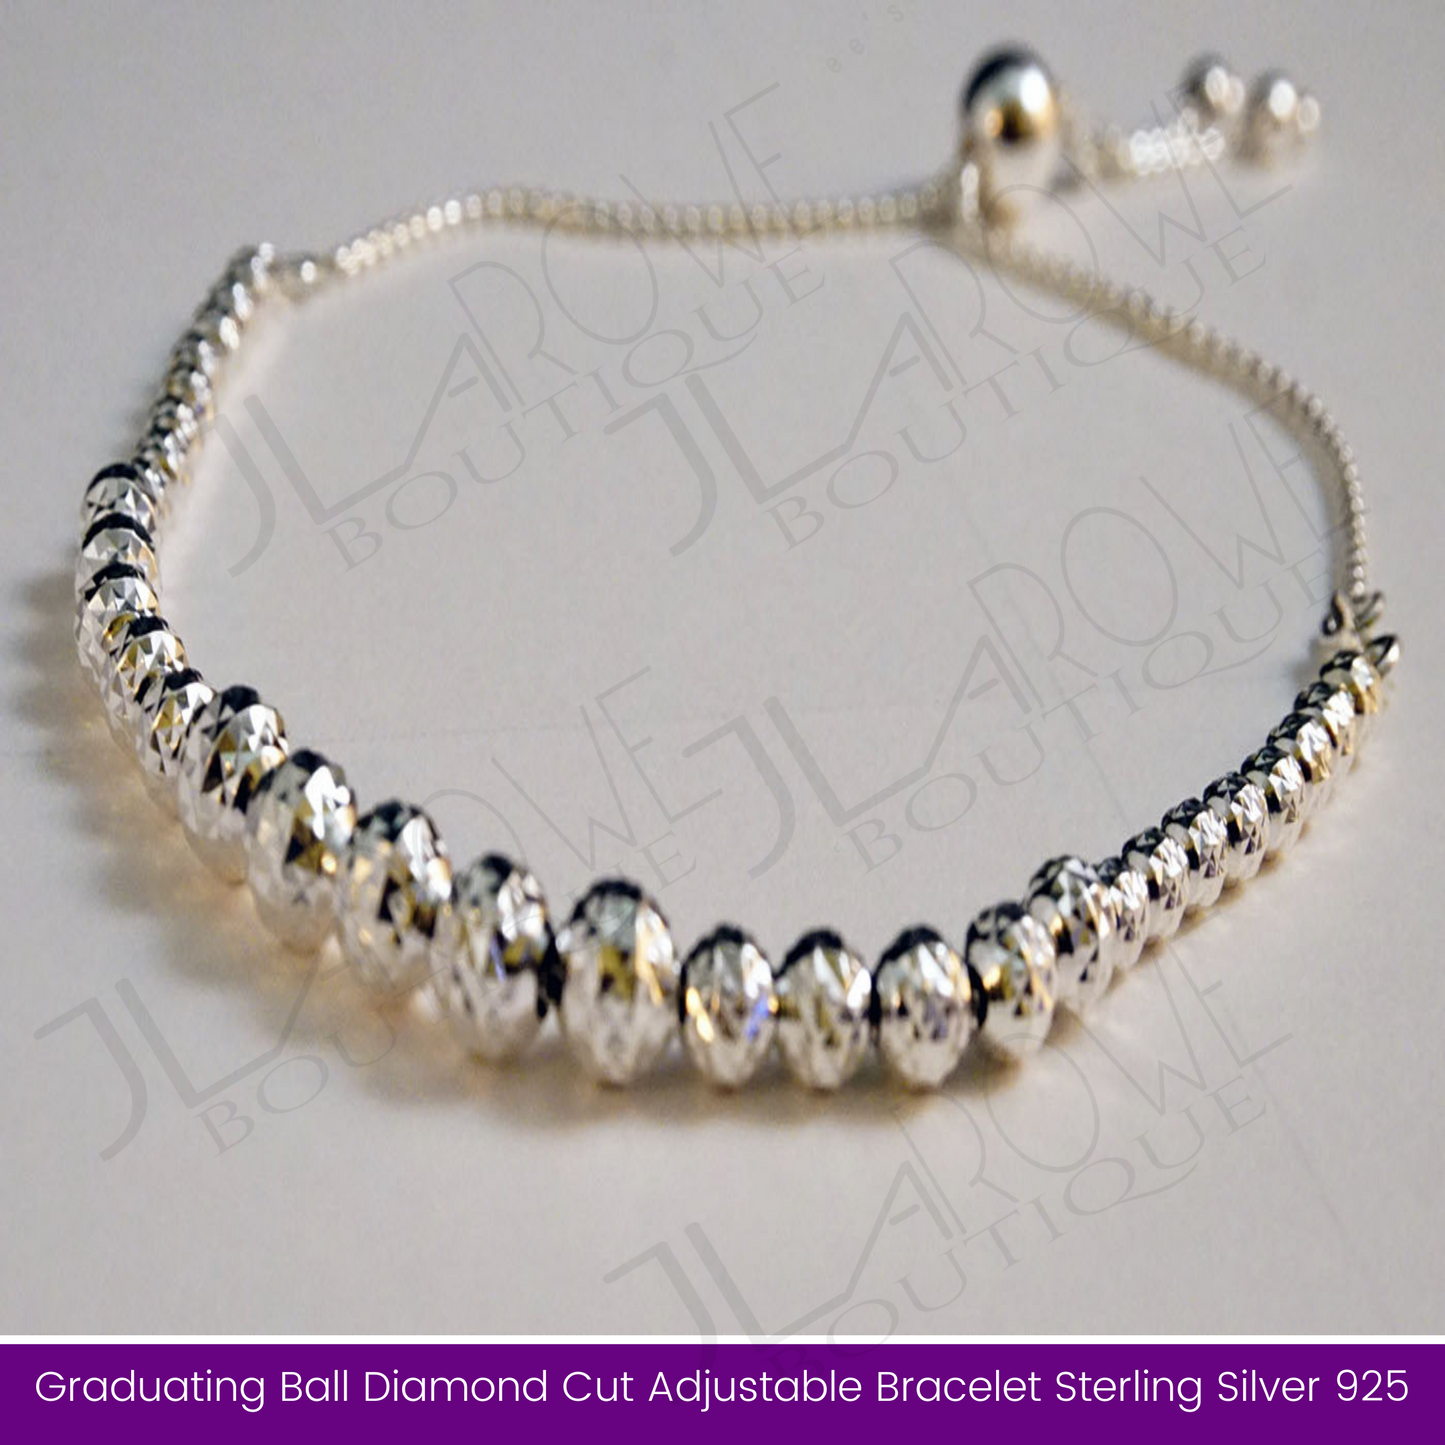 Graduating Ball Diamond Cut Adjustable Bracelet Sterling Silver 925 (Limited Stock)